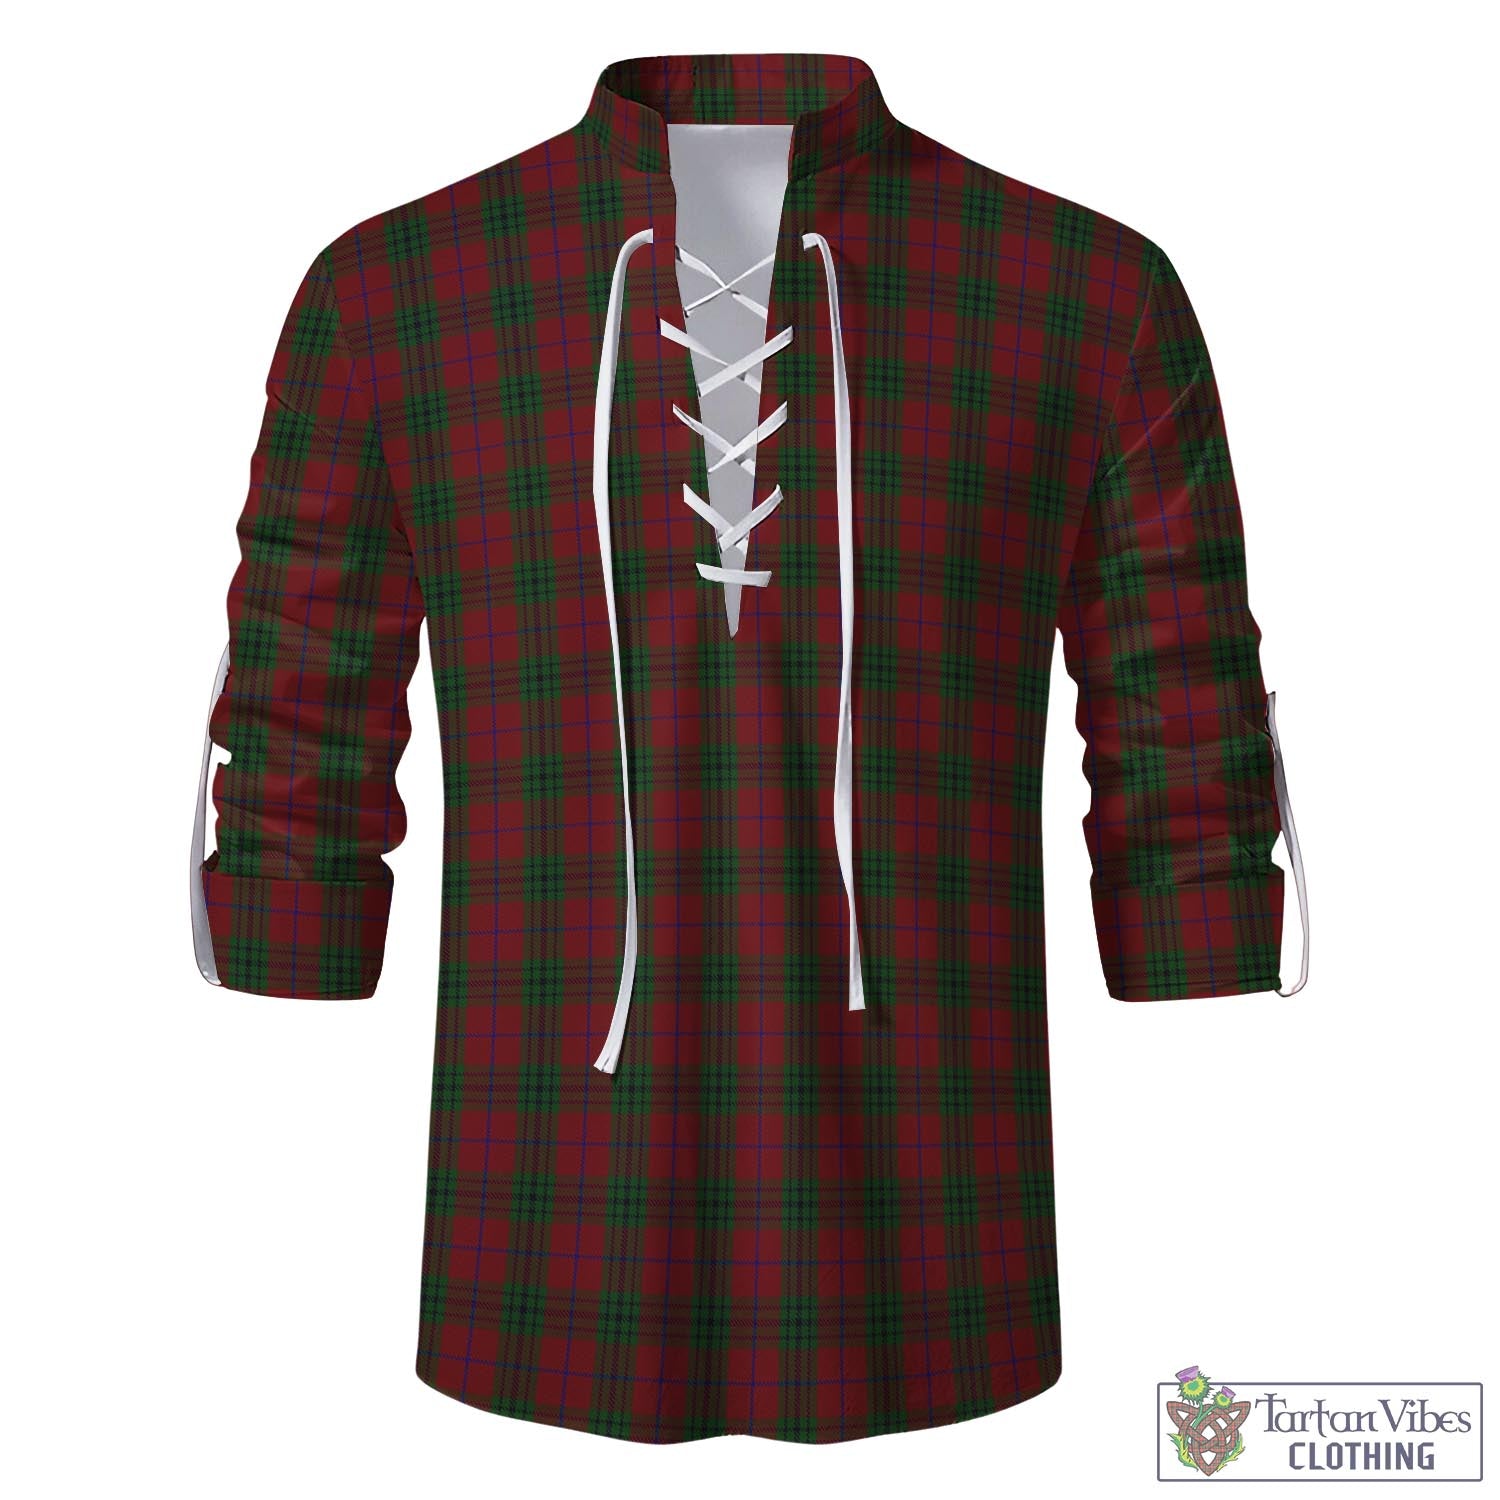 Tartan Vibes Clothing Denny Hunting Tartan Men's Scottish Traditional Jacobite Ghillie Kilt Shirt